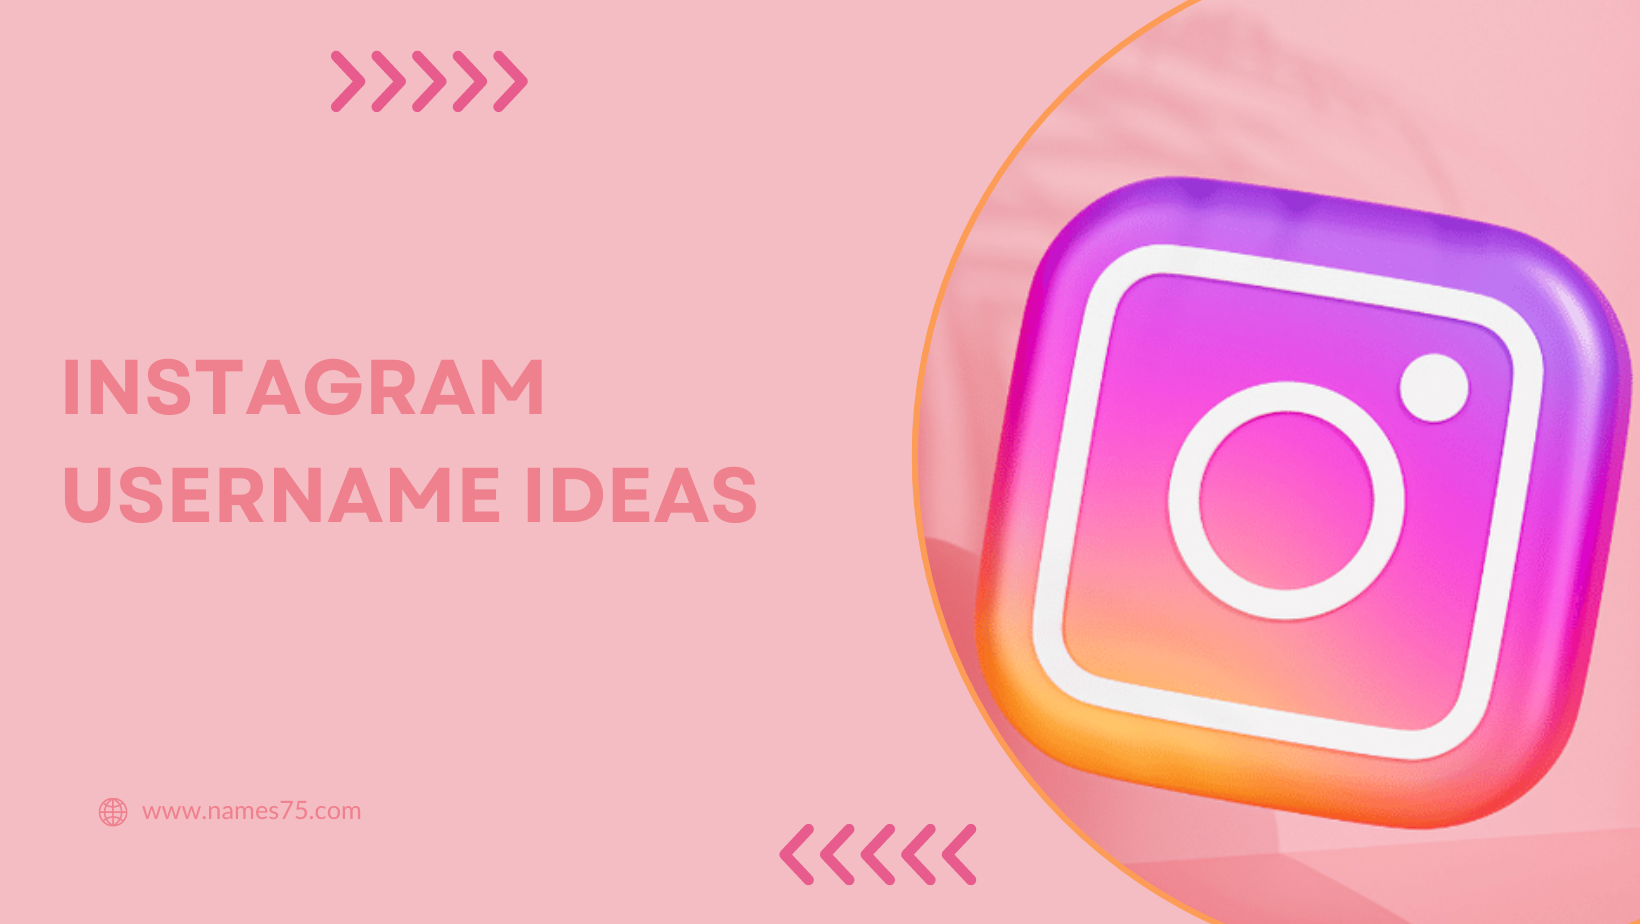 Instagram Username Ideas